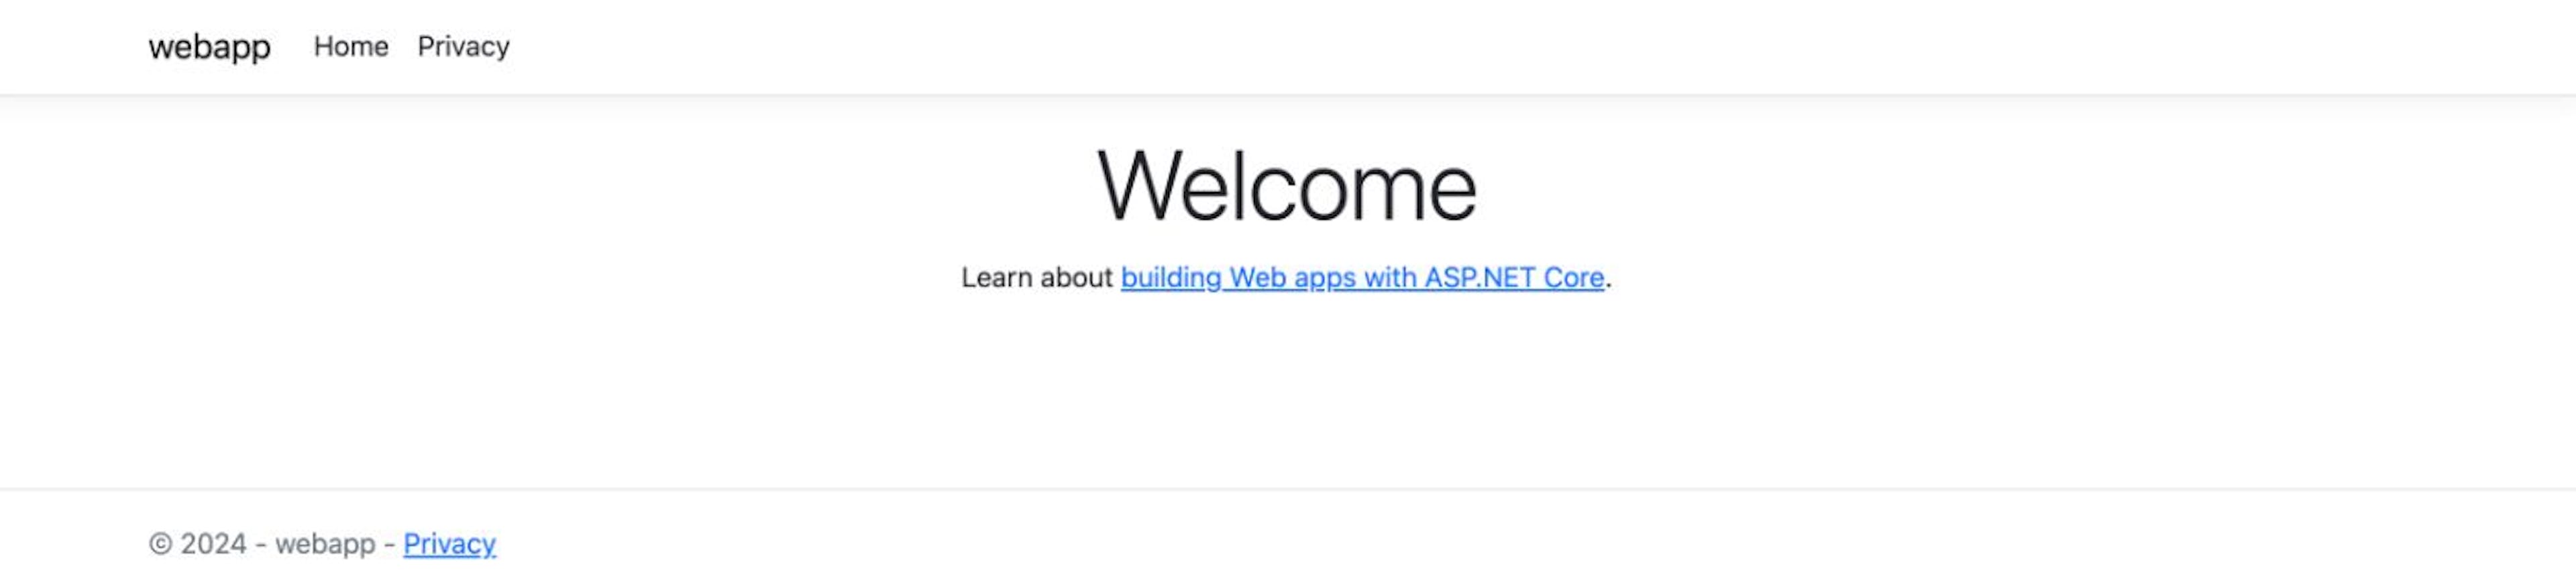 ASP.NET Core Web App: Startseite